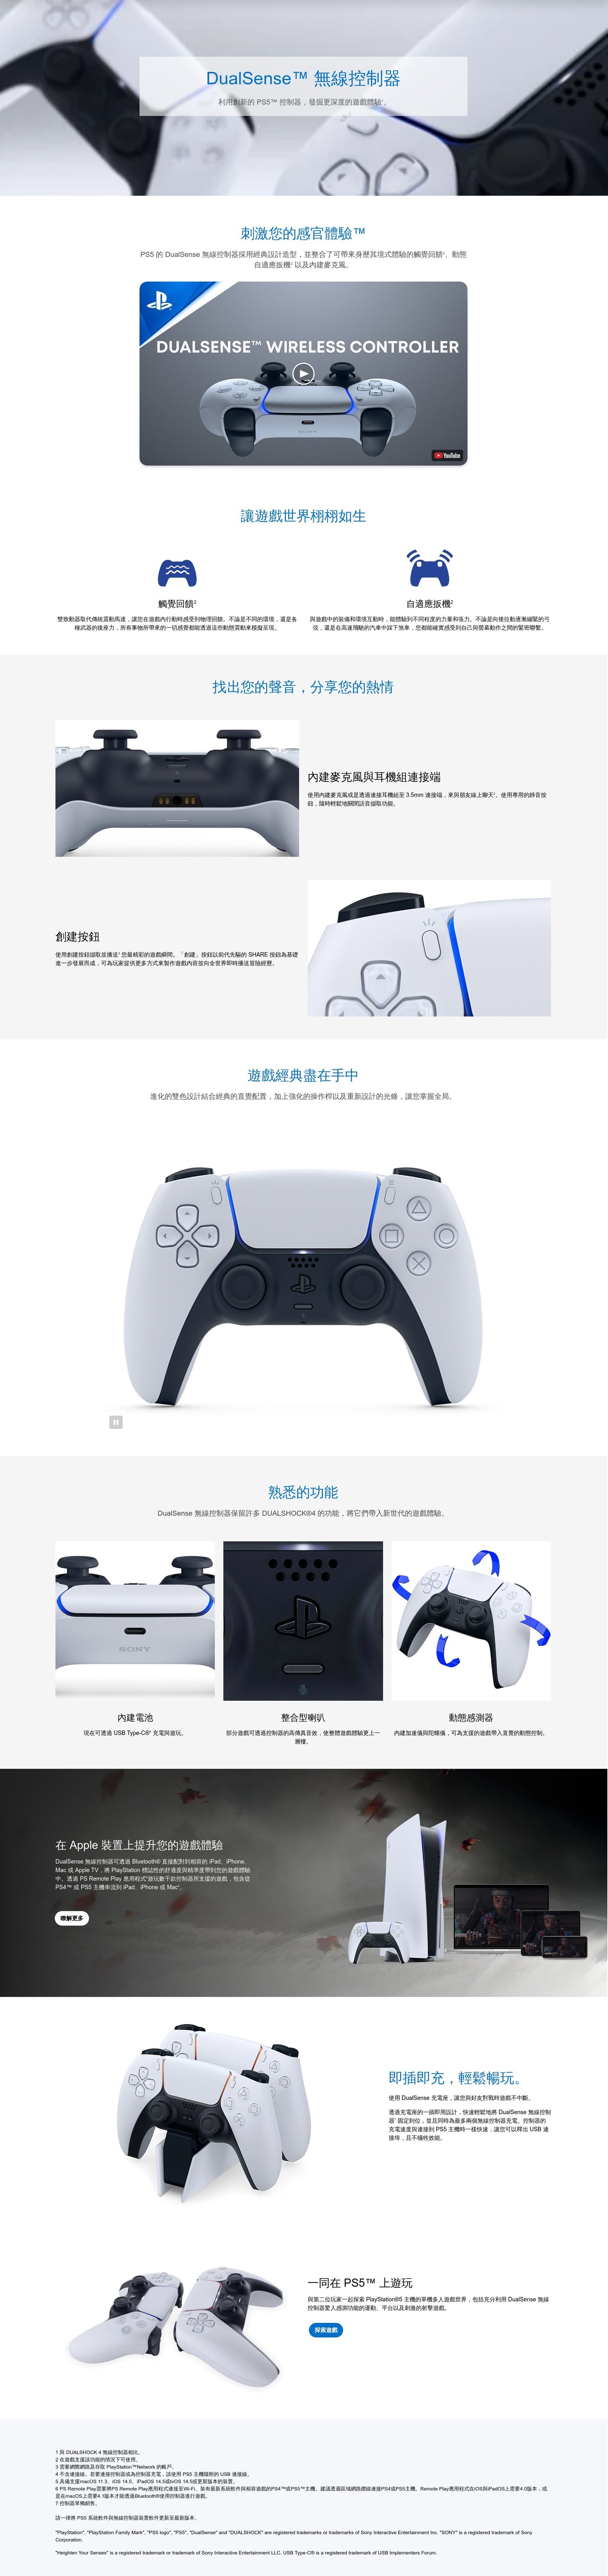 PS5 DualSense ワイヤレス コントローラー - ホワイト [台湾企業製品